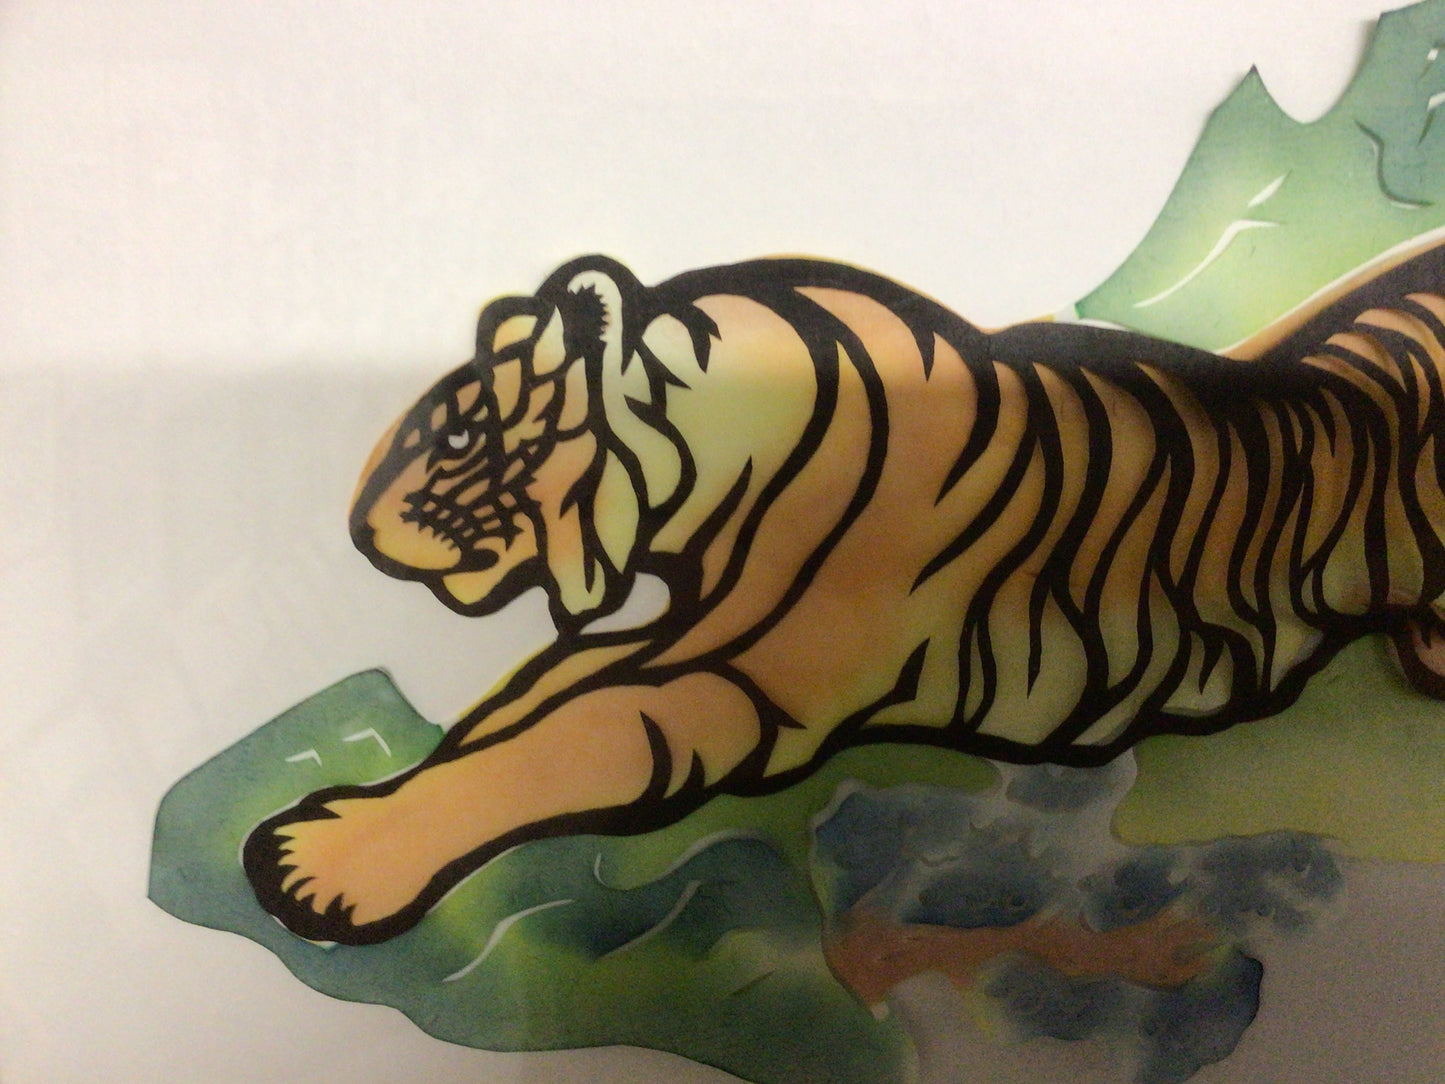 Stylish Vintage Framed Chinese Tiger & Landscape Fan Paper Cut Art